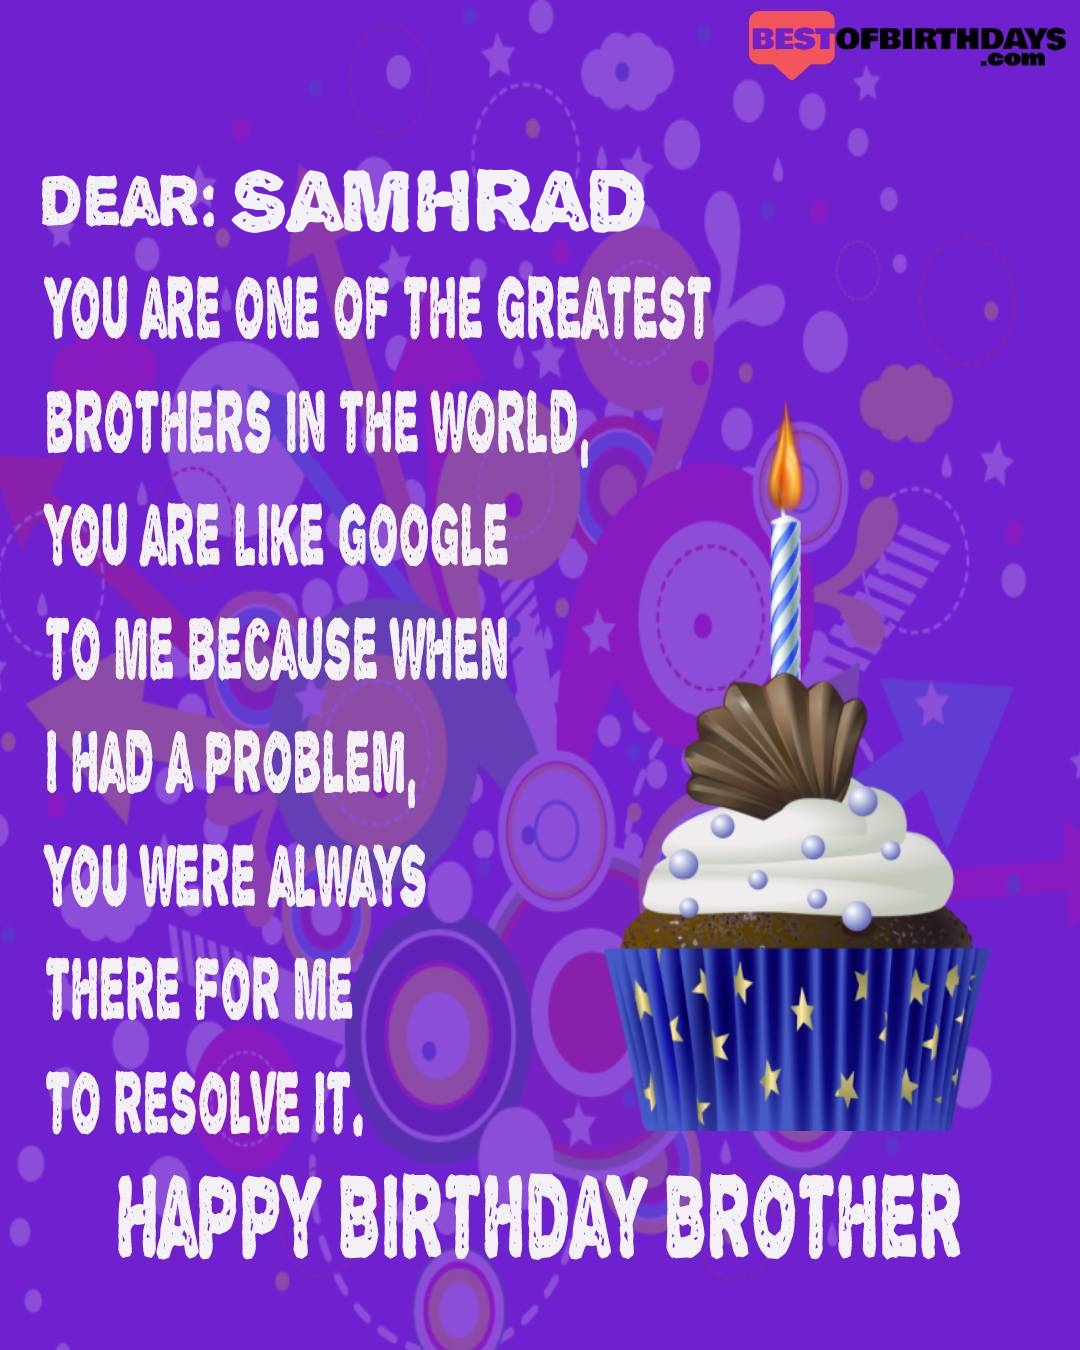 Happy birthday samhrad bhai brother bro